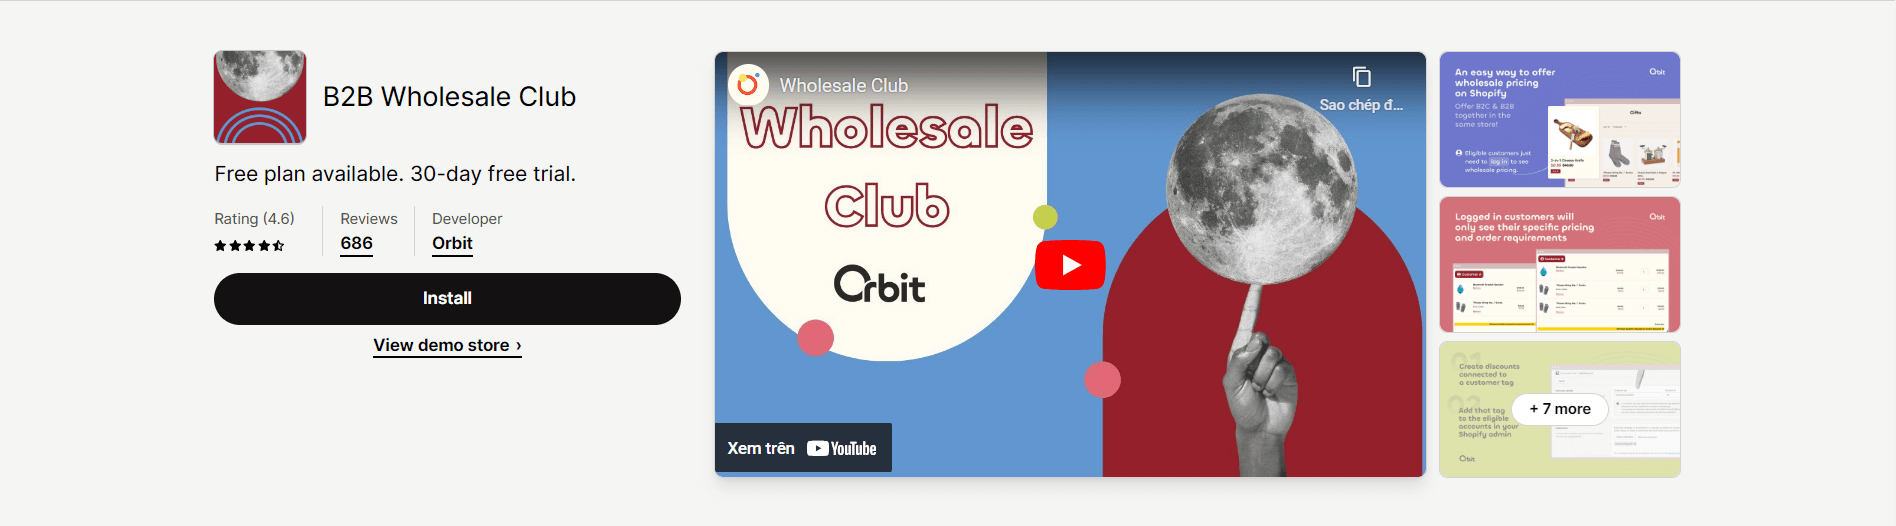 B2B Wholesale Club app